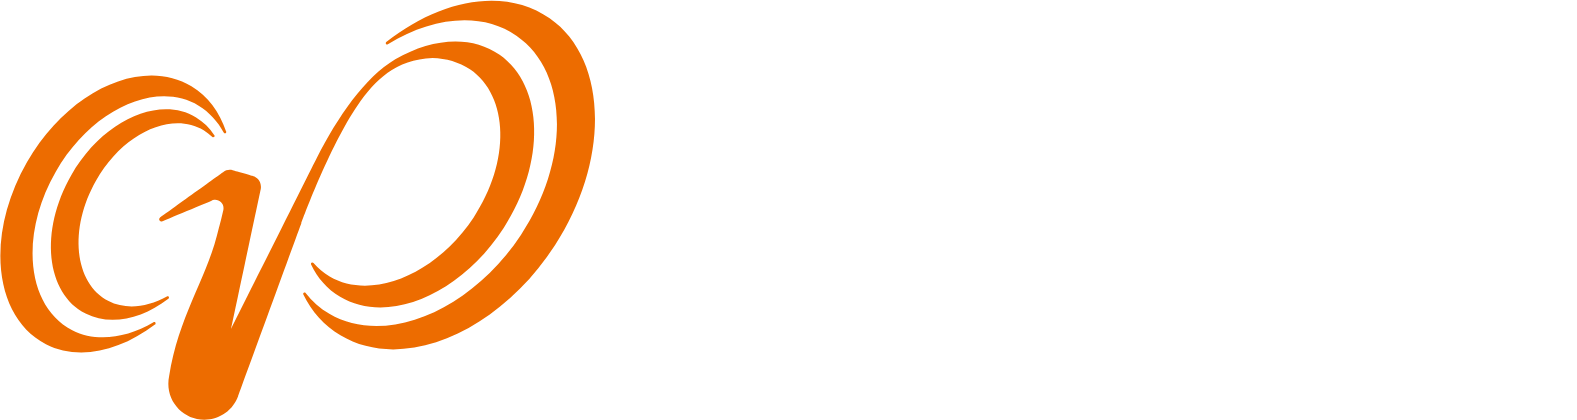 CGN Mining Company logo grand pour les fonds sombres (PNG transparent)